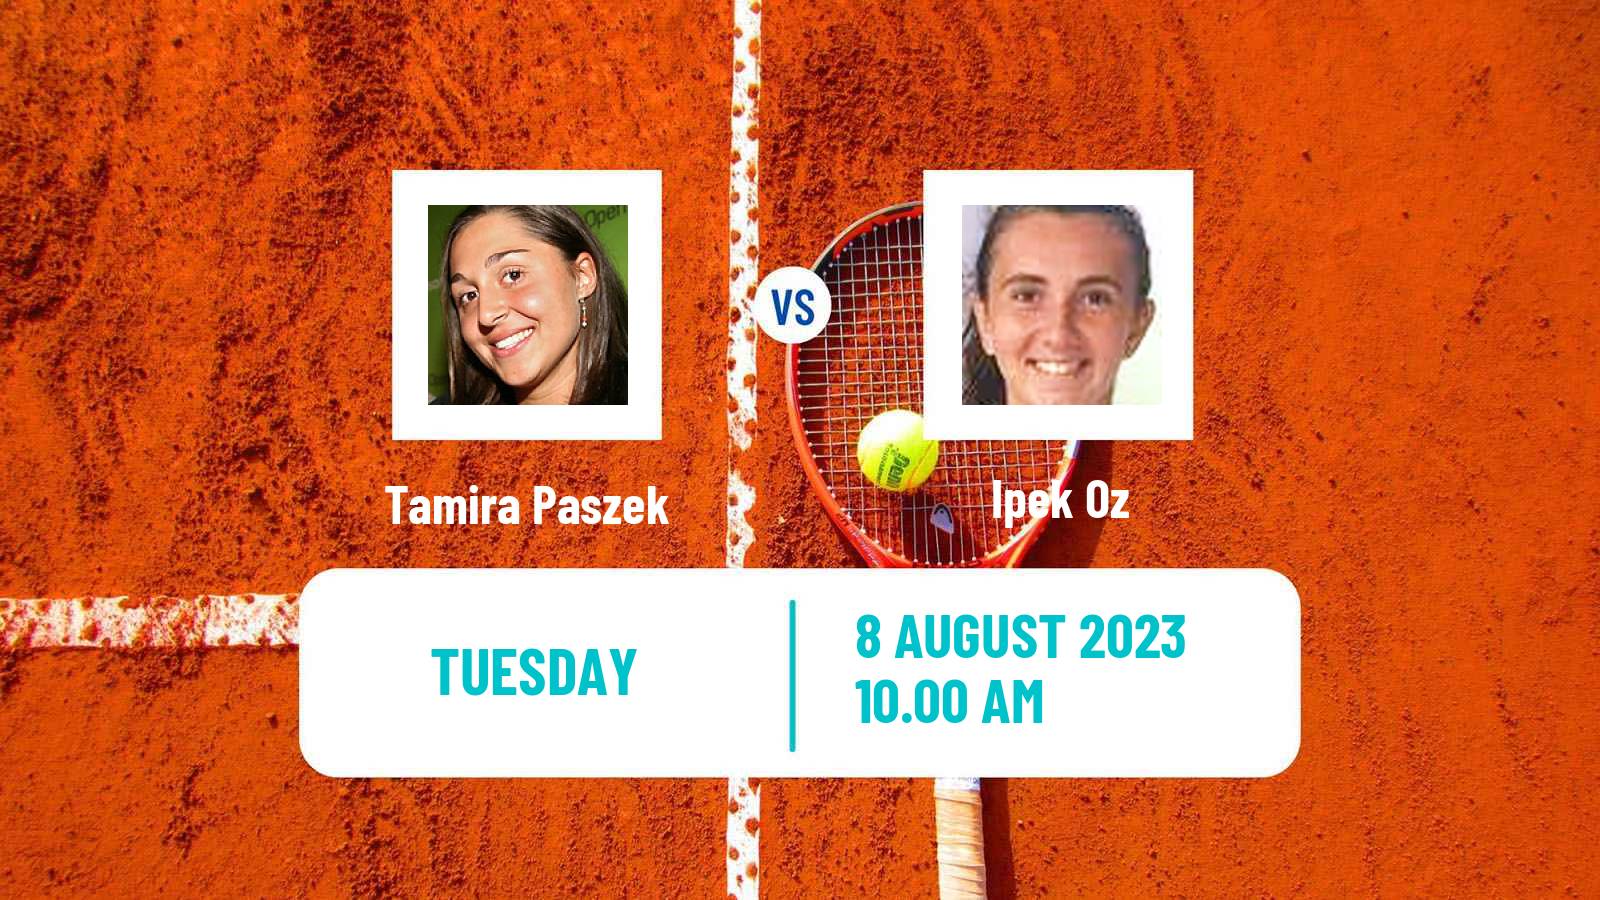 Tennis ITF W25 Roehampton 3 Women Tamira Paszek - Ipek Oz